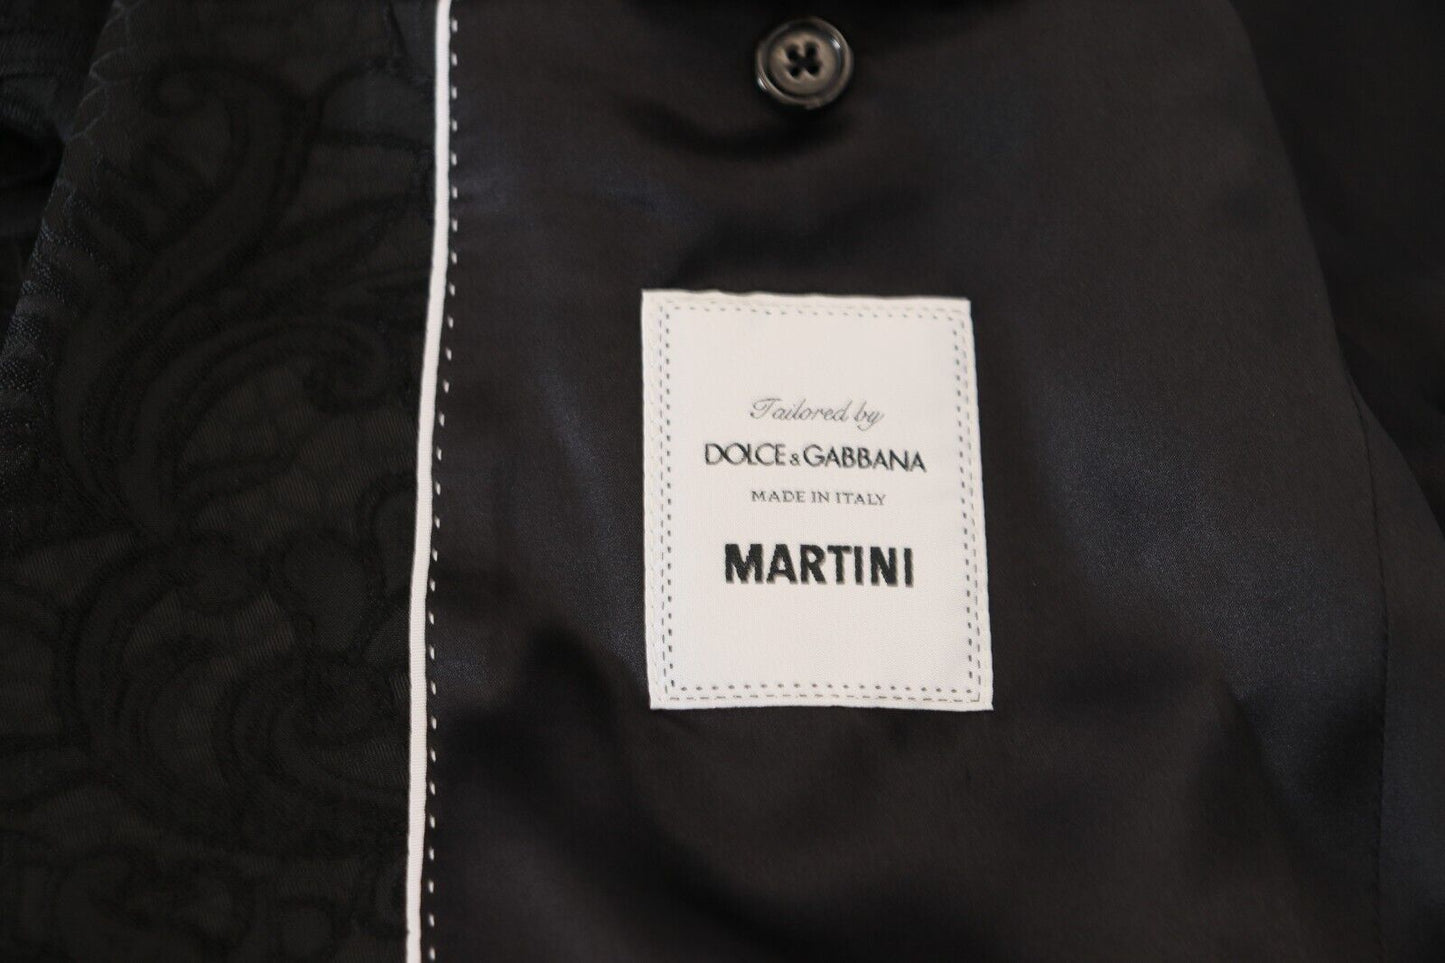 Dolce & Gabbana Black Floral Jacquard Single Breasted MARTINI Blazer